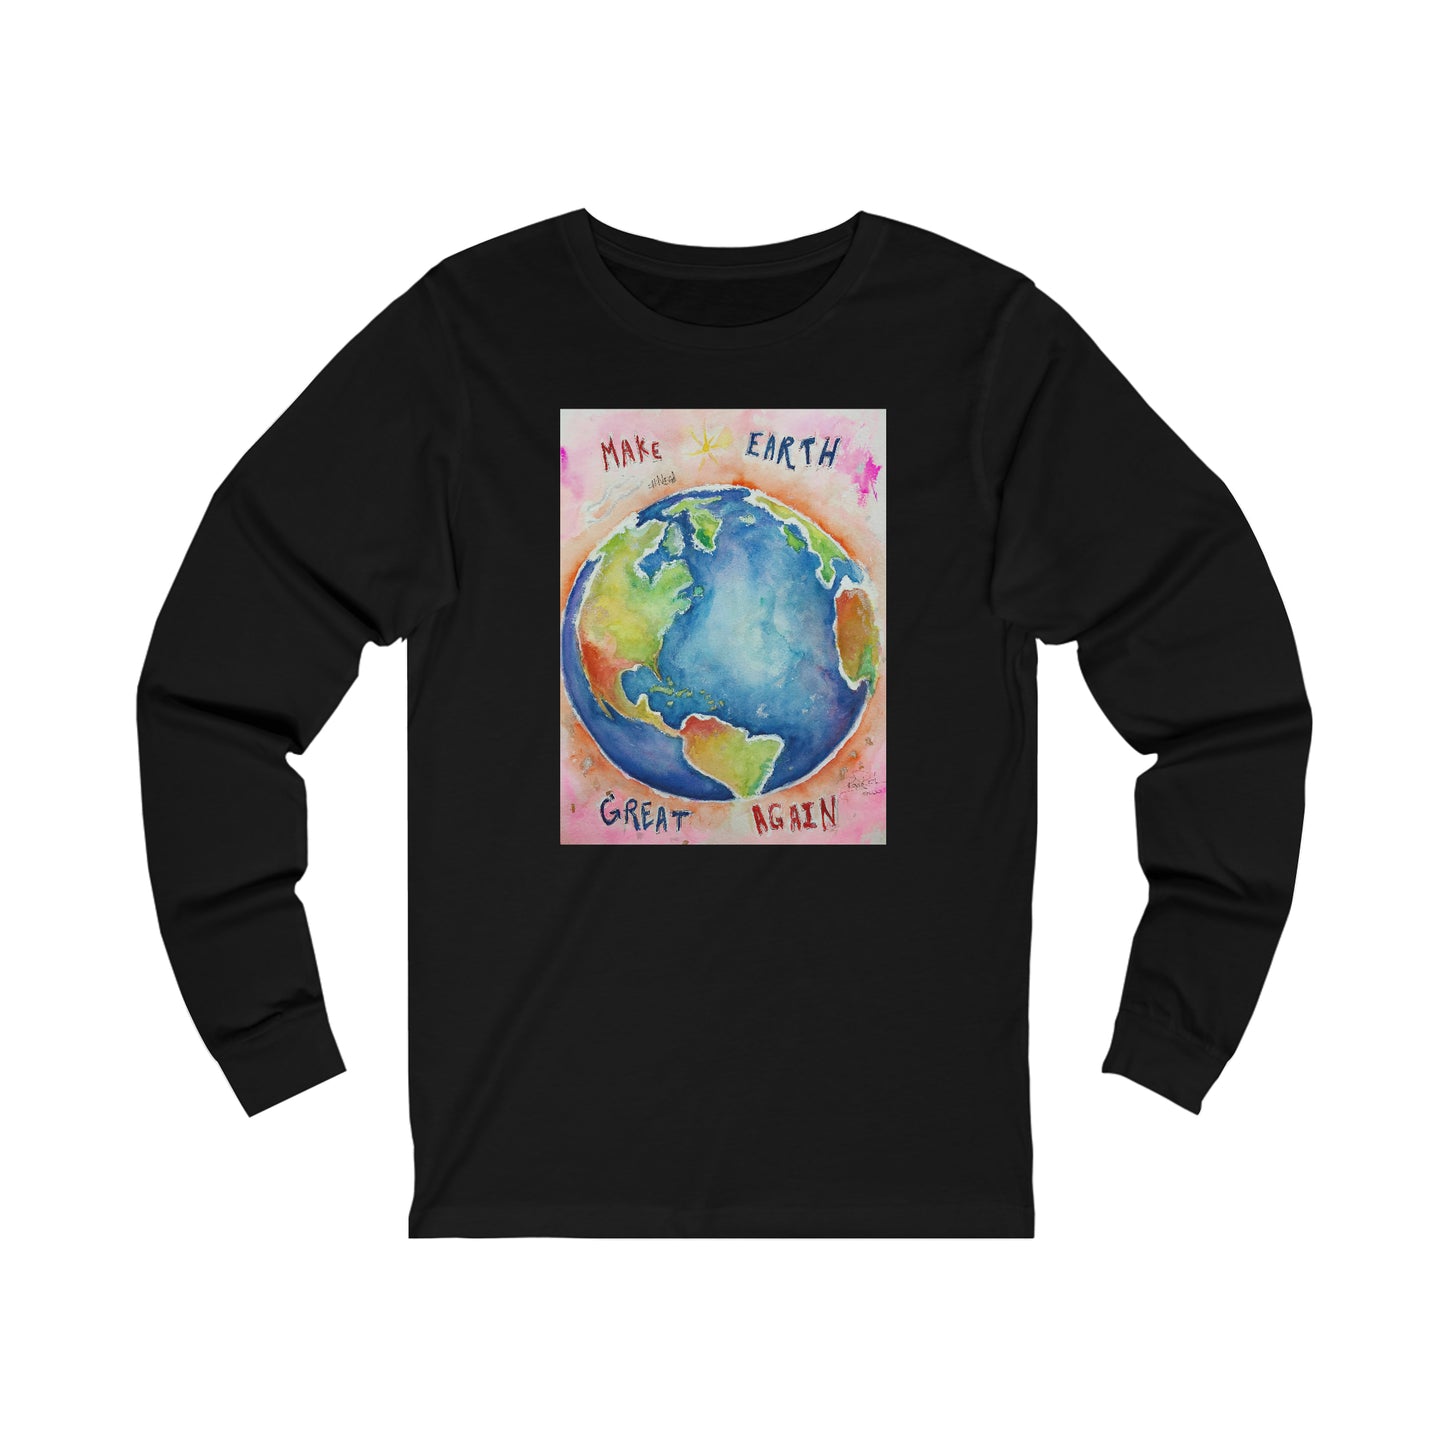 Hacer que la Tierra vuelva a ser grandiosa camiseta unisex Jersey de manga larga